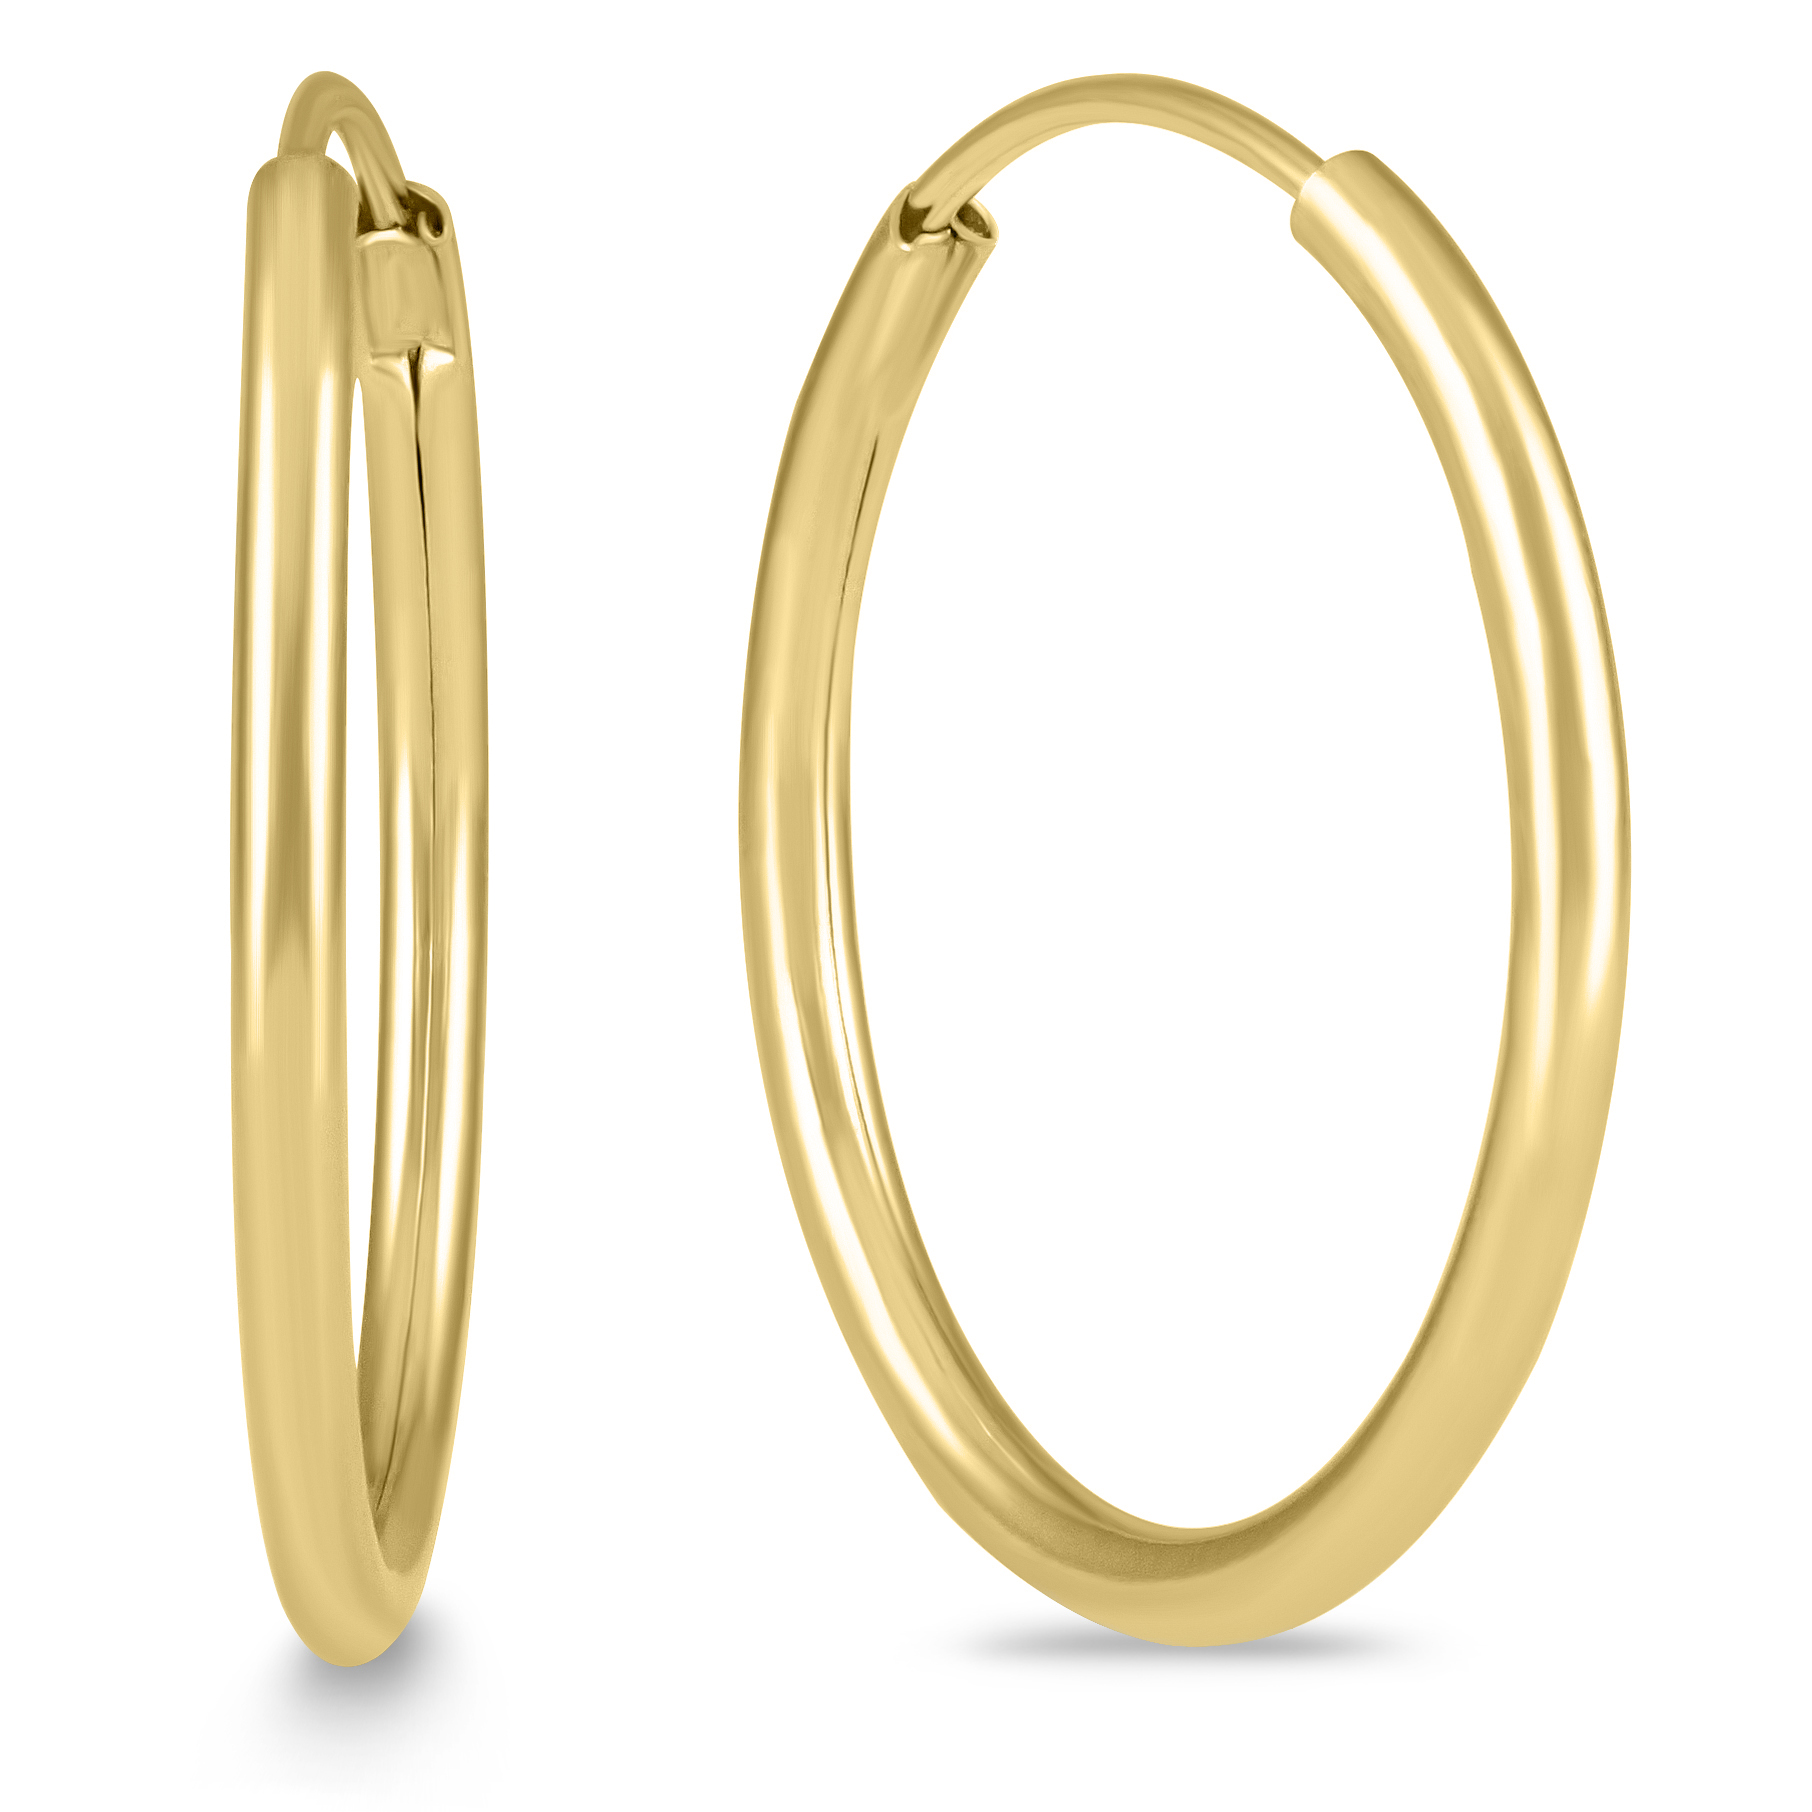 szul.com 3/4 Inch Endless 14K Yellow Gold Filled Hoop Earrings (20mm Diameter)